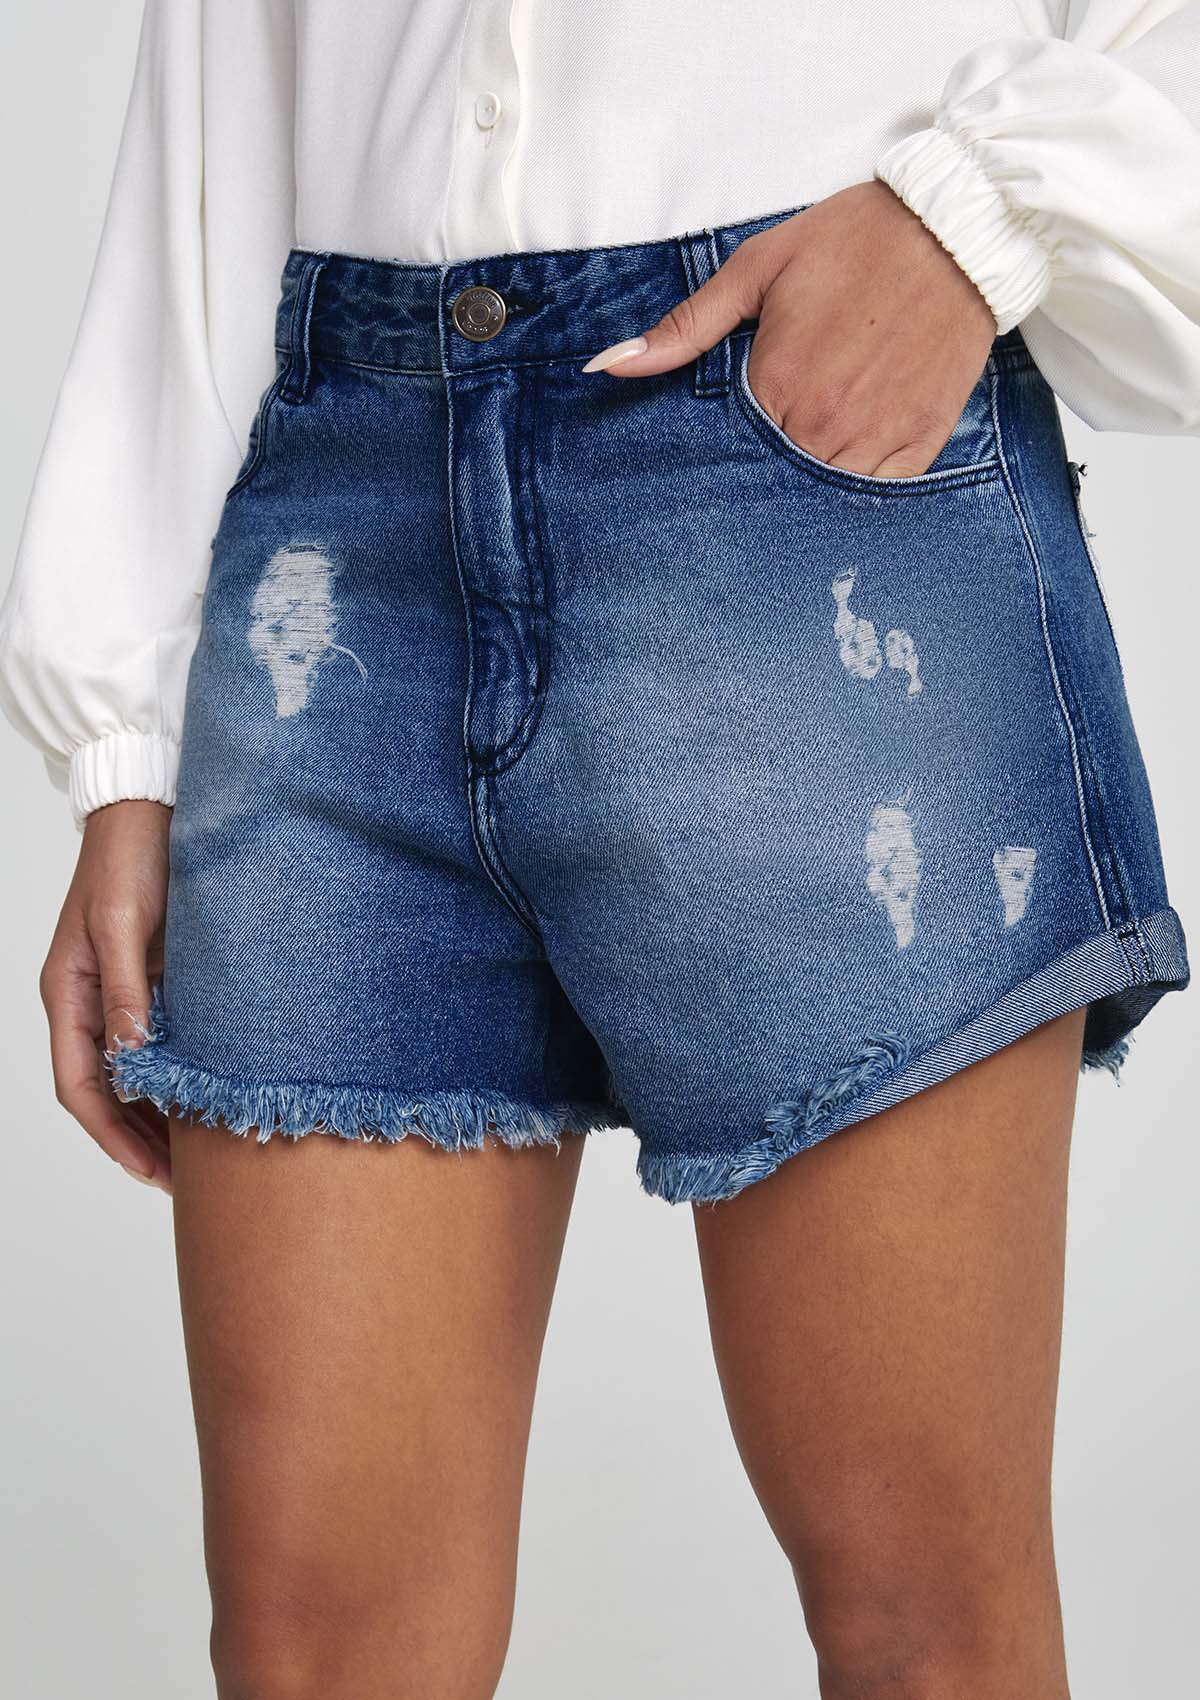 Shorts Jeans Feminino Cintura Alta Boyfriend